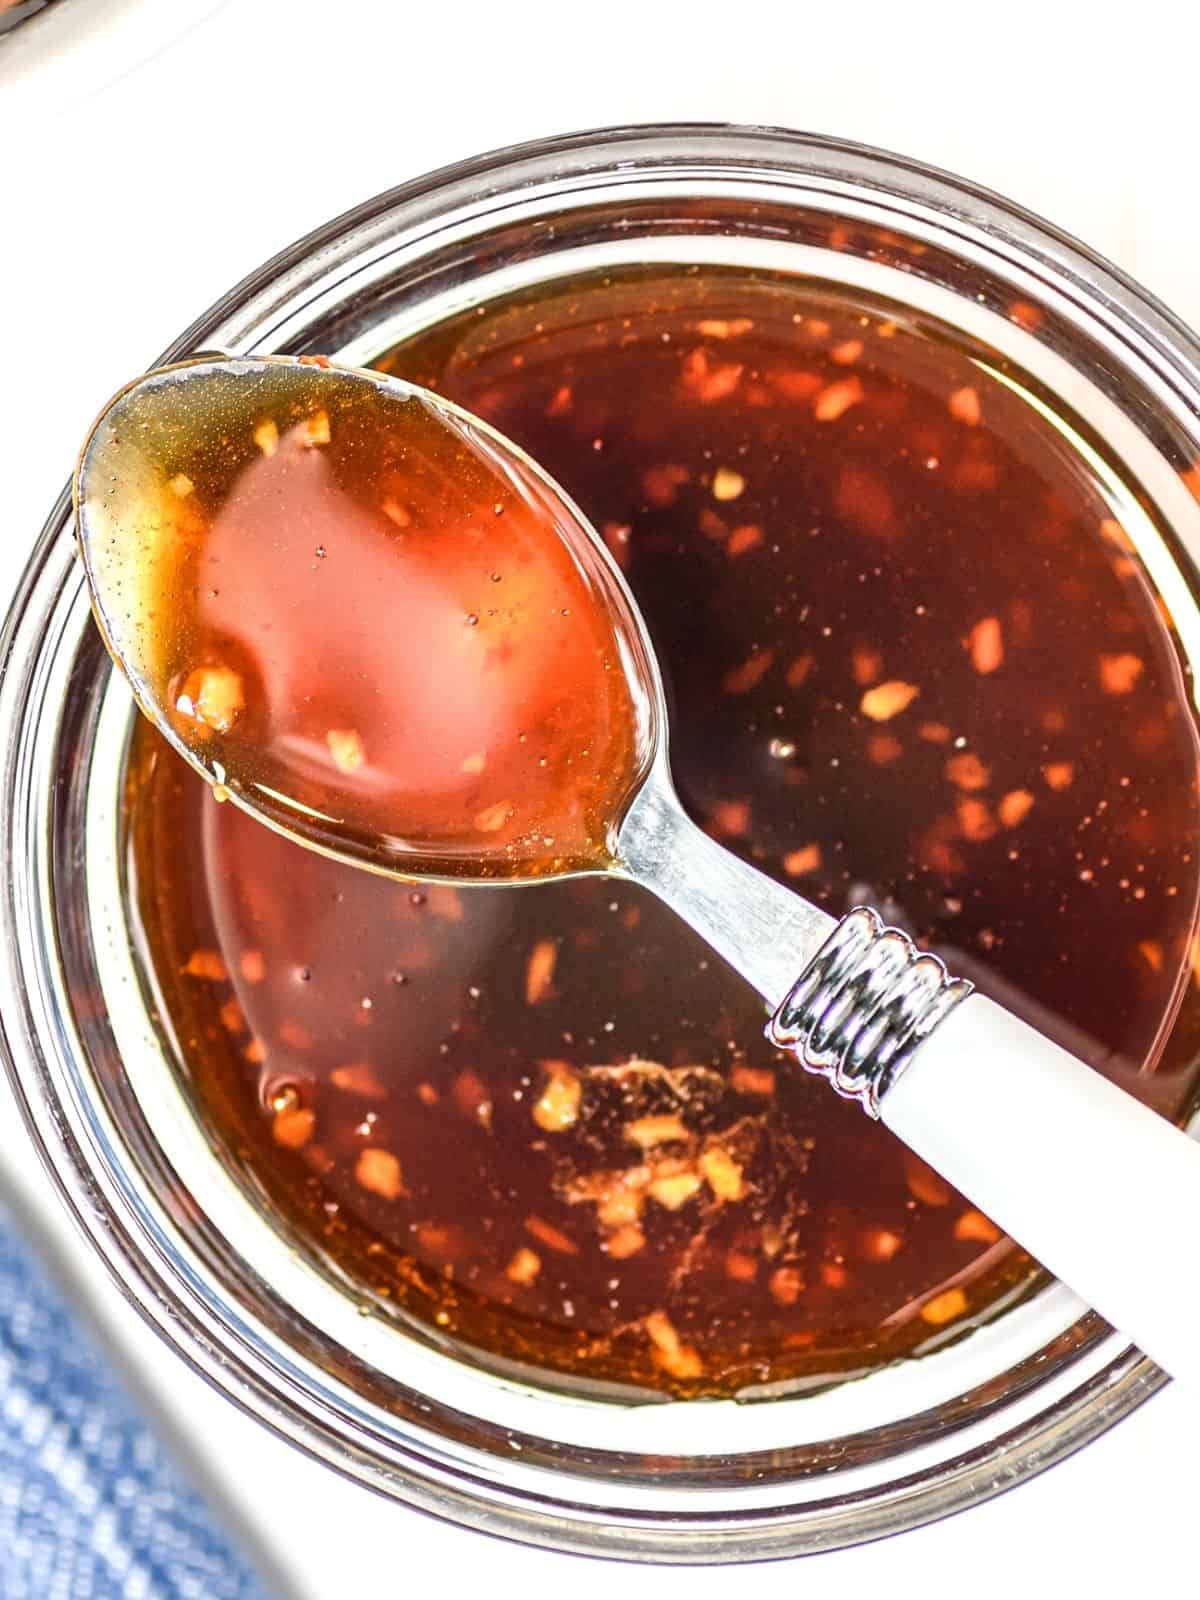 Spoon of honey sriracha sauce over a glass bowl of sauce